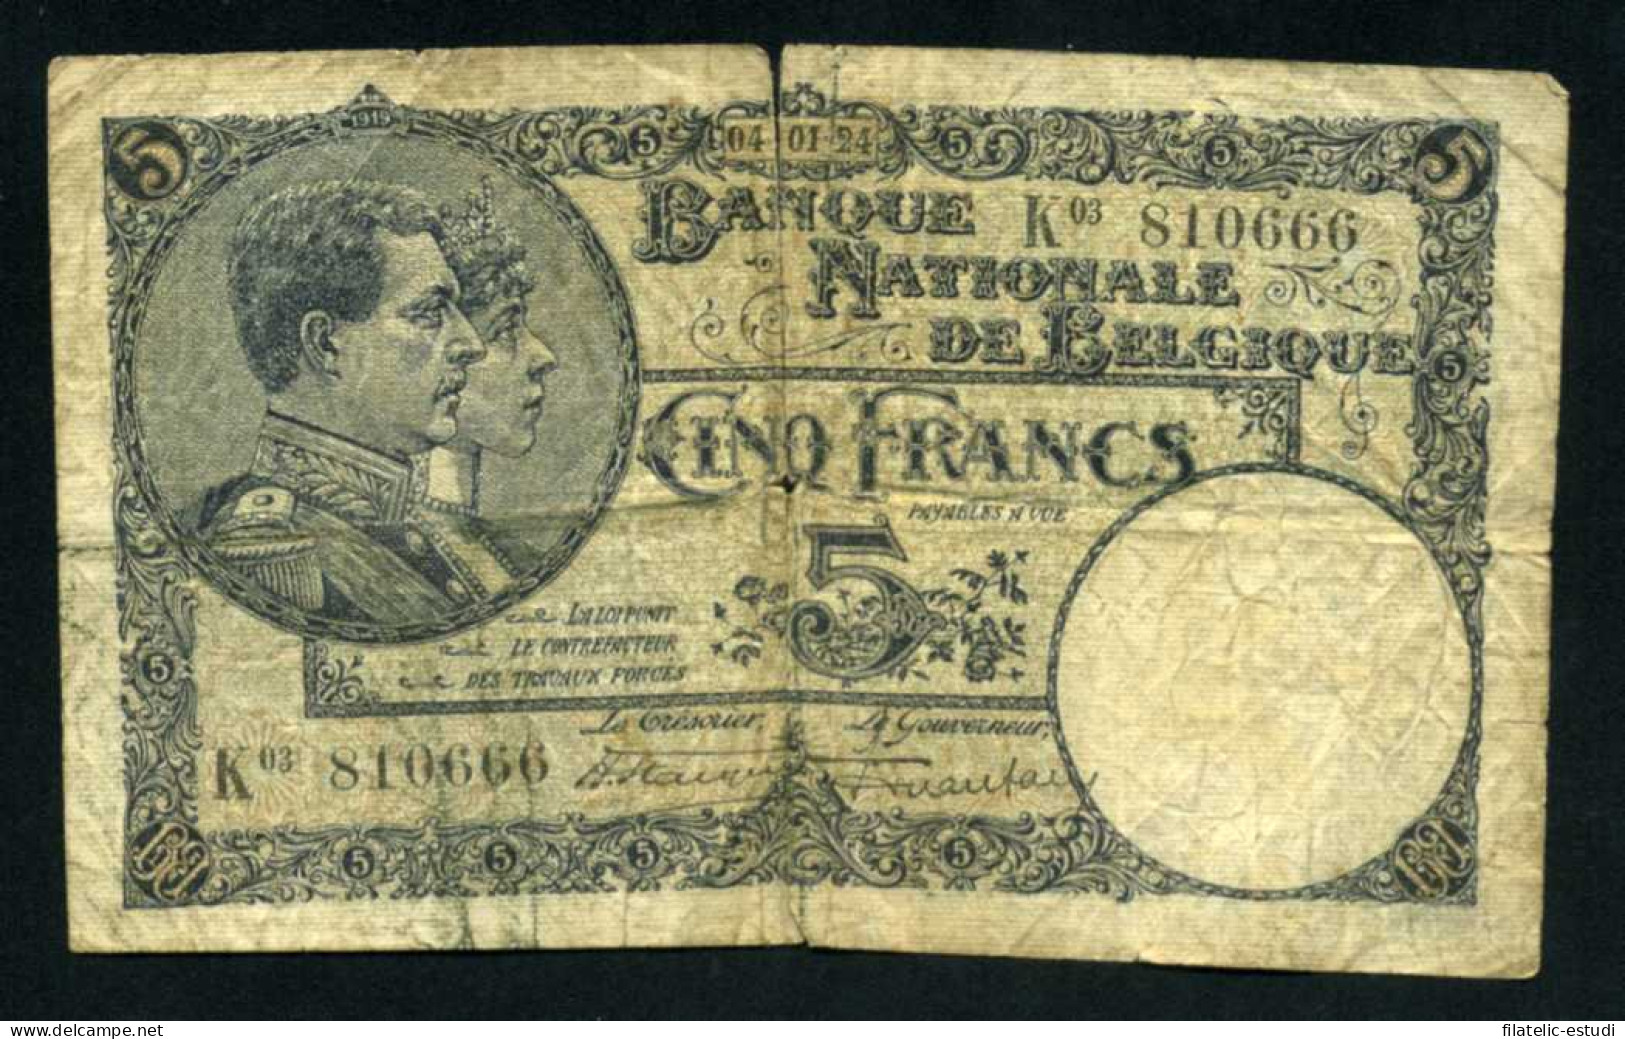 Bélgica 5 Francos 1926 Firmas De Hautain Y Stacquet Billete Banknote Circulado - Autres - Europe